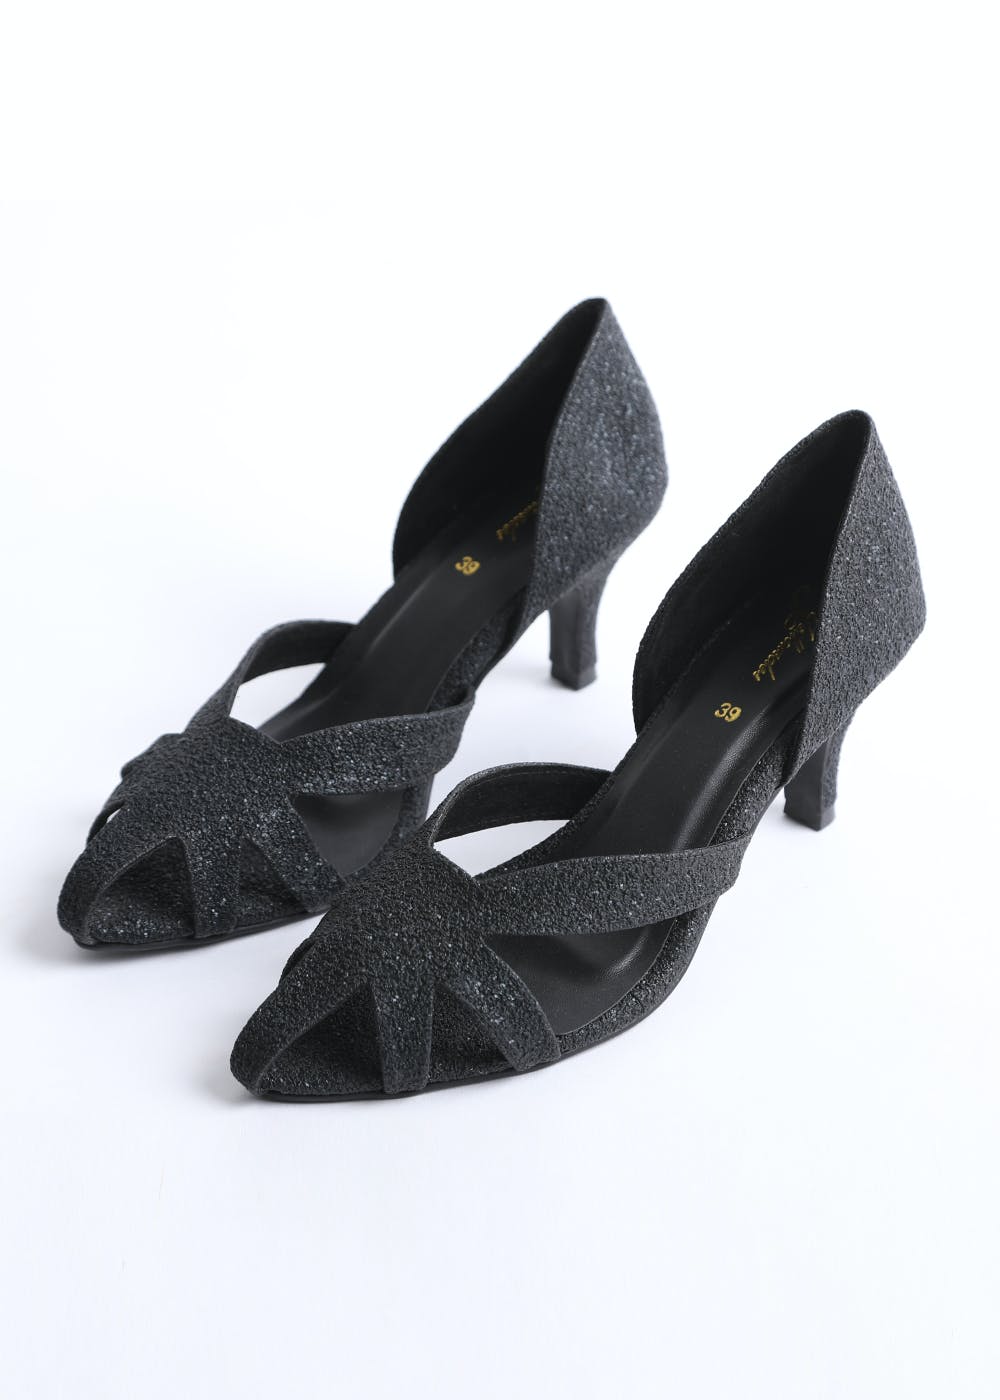 Get Shimmer Metallic Black Heels at ₹ 999 | LBB Shop